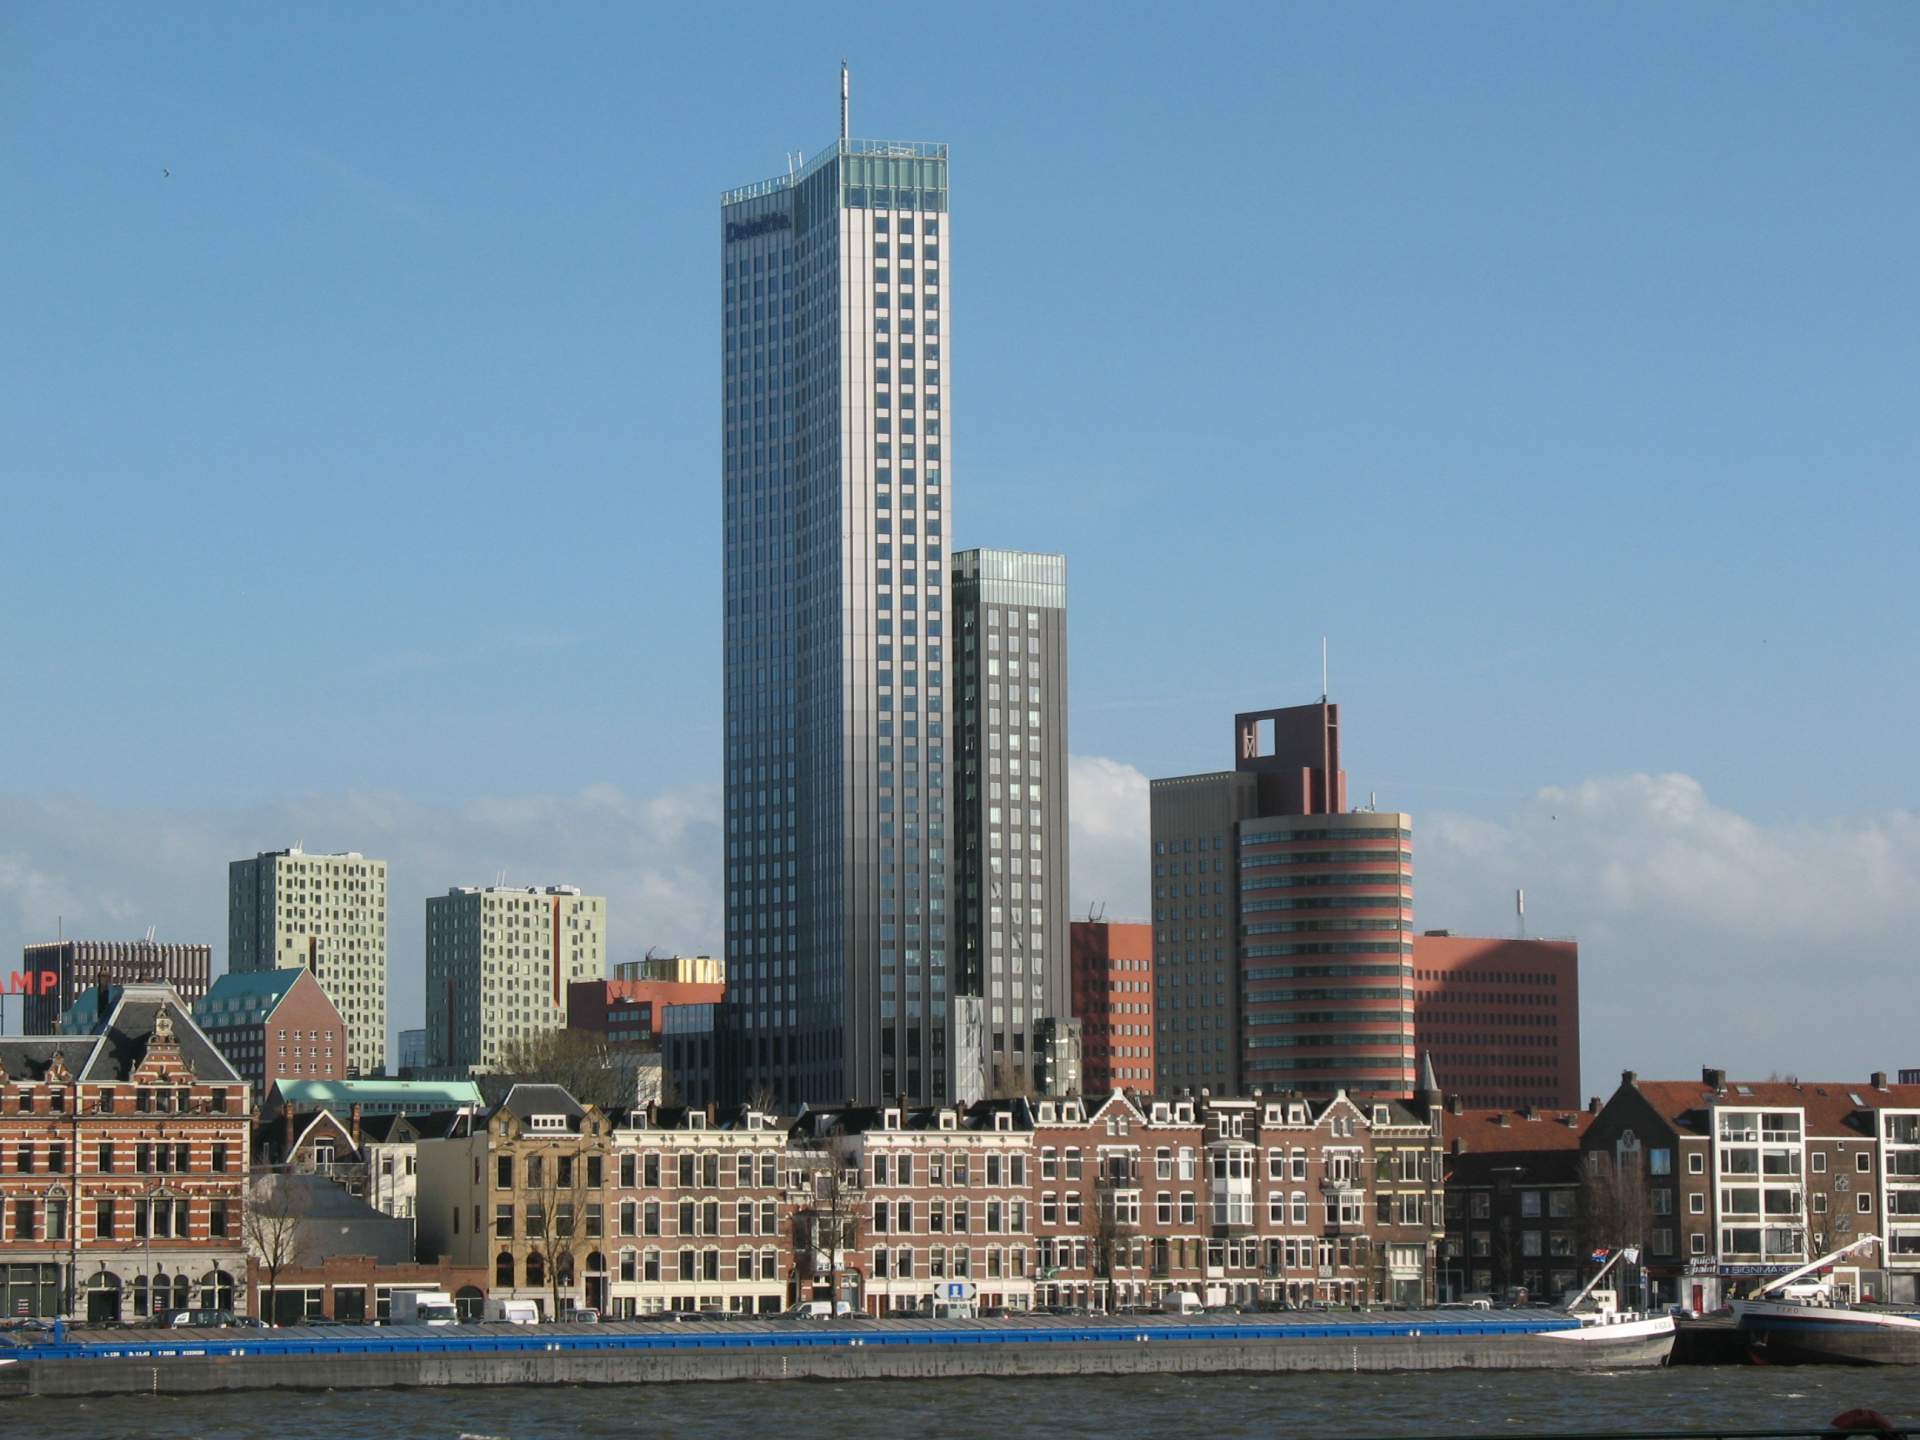 Busreis dagtrip Rotterdam ©ambra from Pixabay